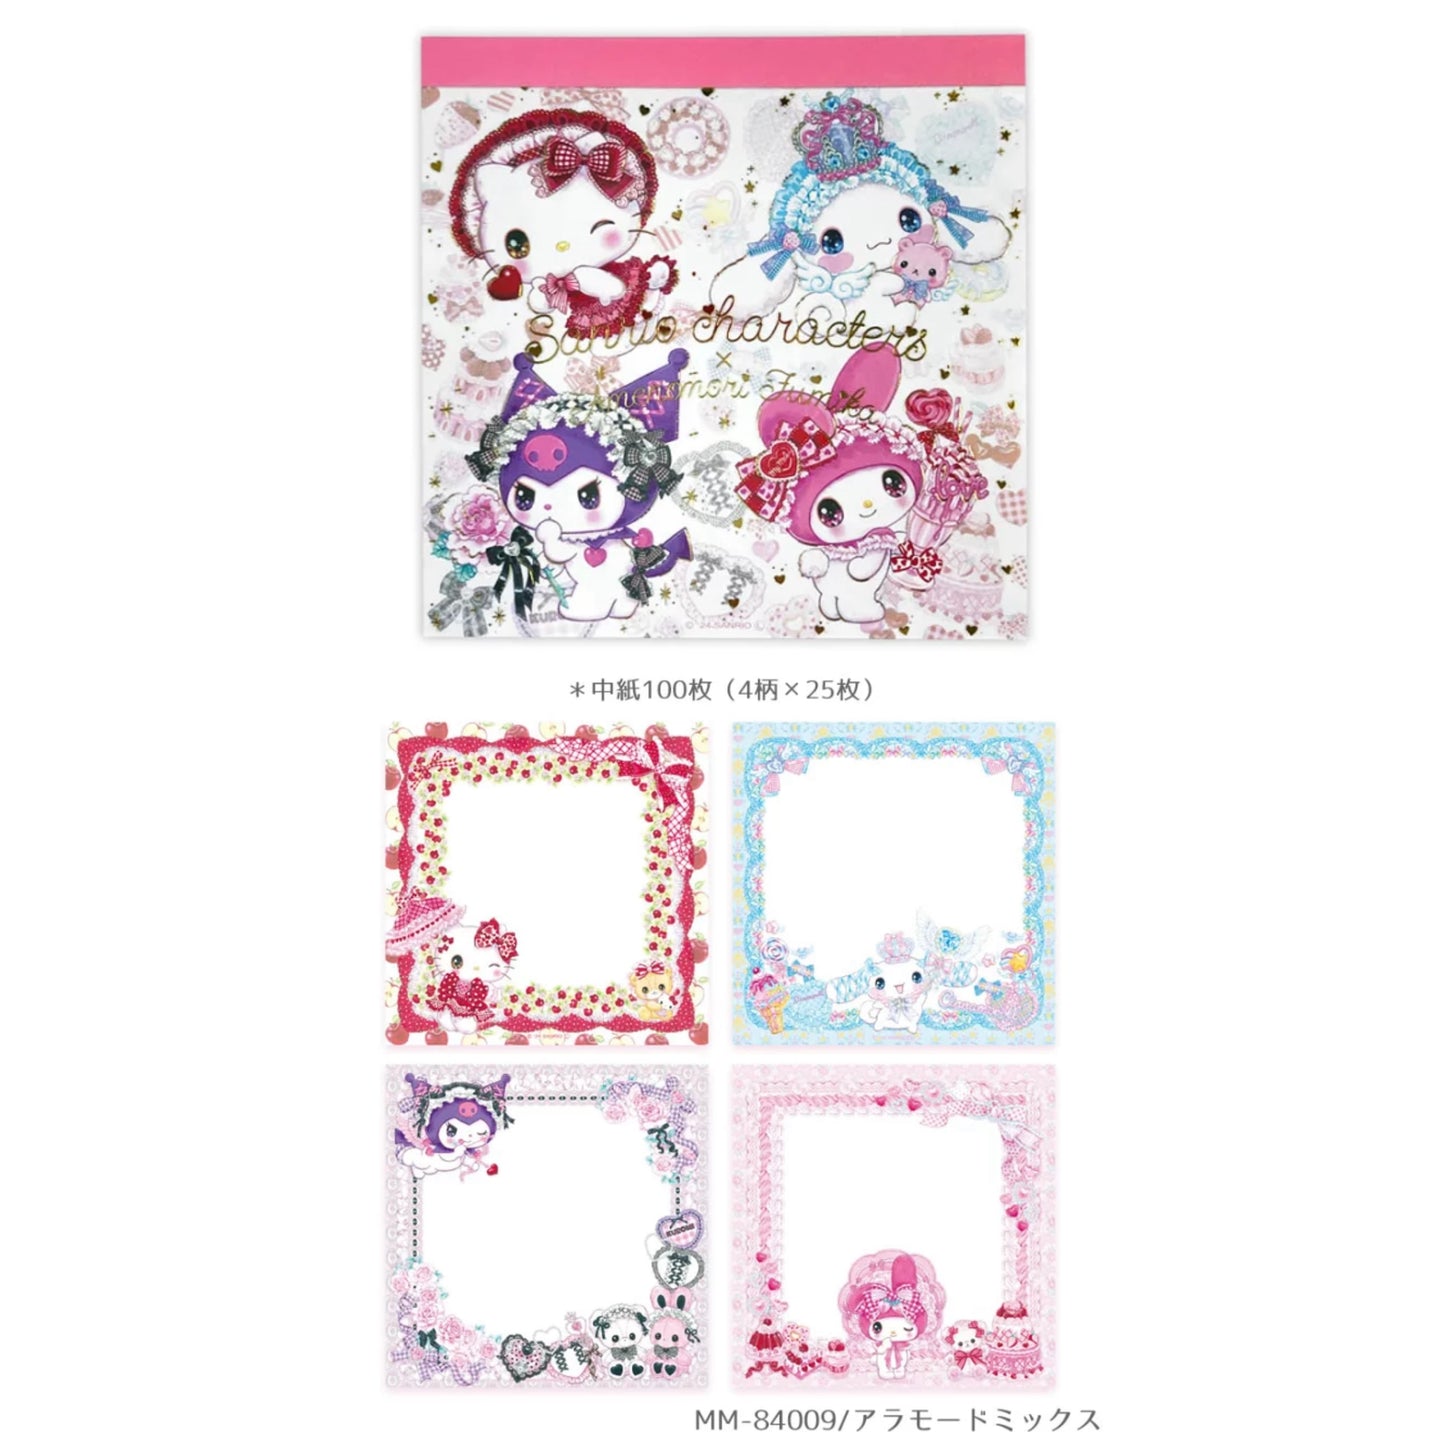 【Order】Sanrio x Amenomori Fumika Stationery Series - Memo Pad